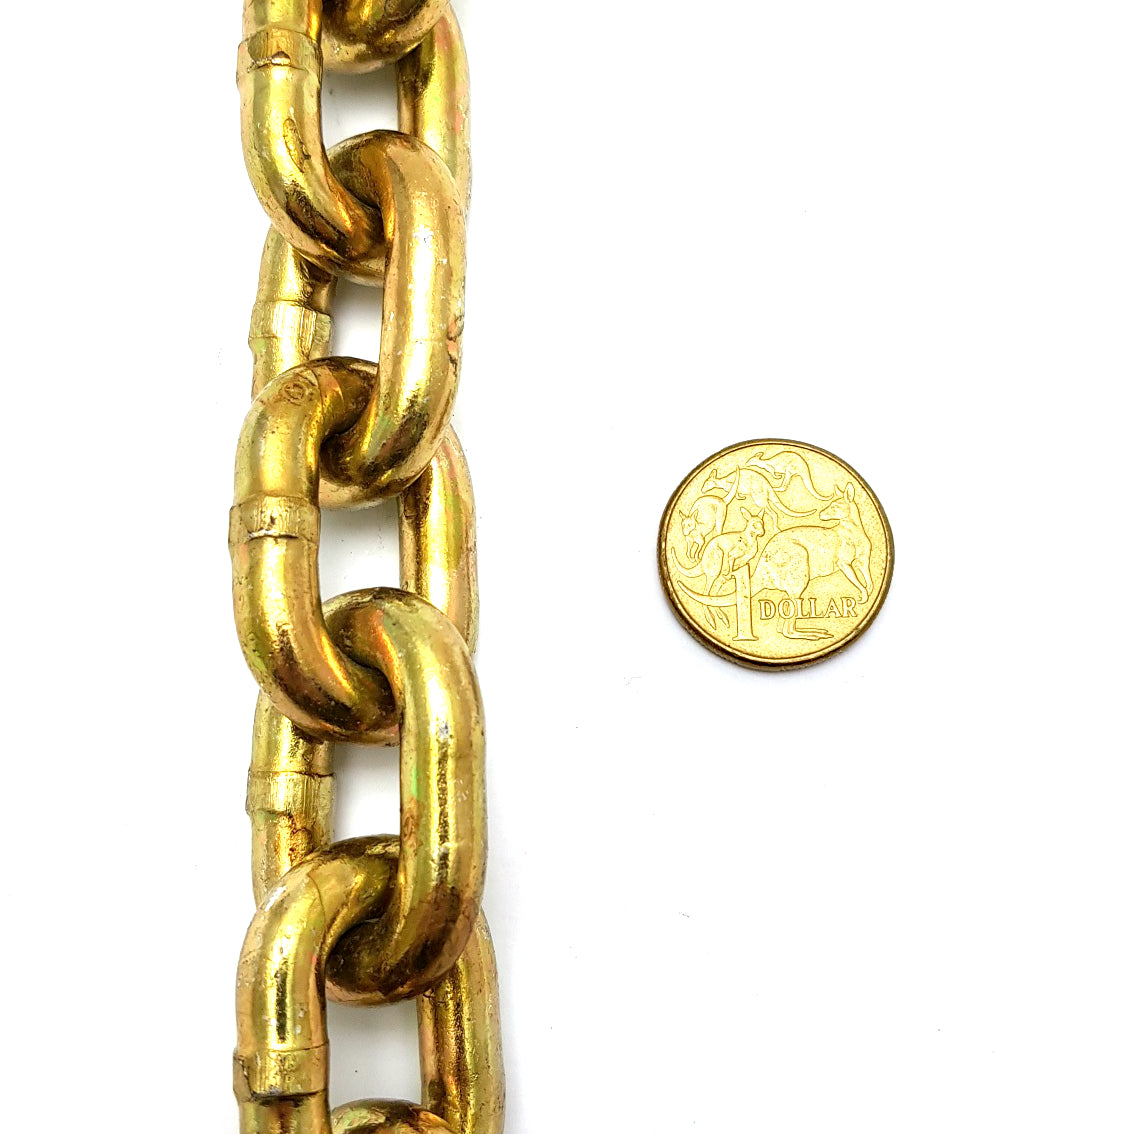 Security Chain, size 8mm, qty 2m. Melbourne, Australia.